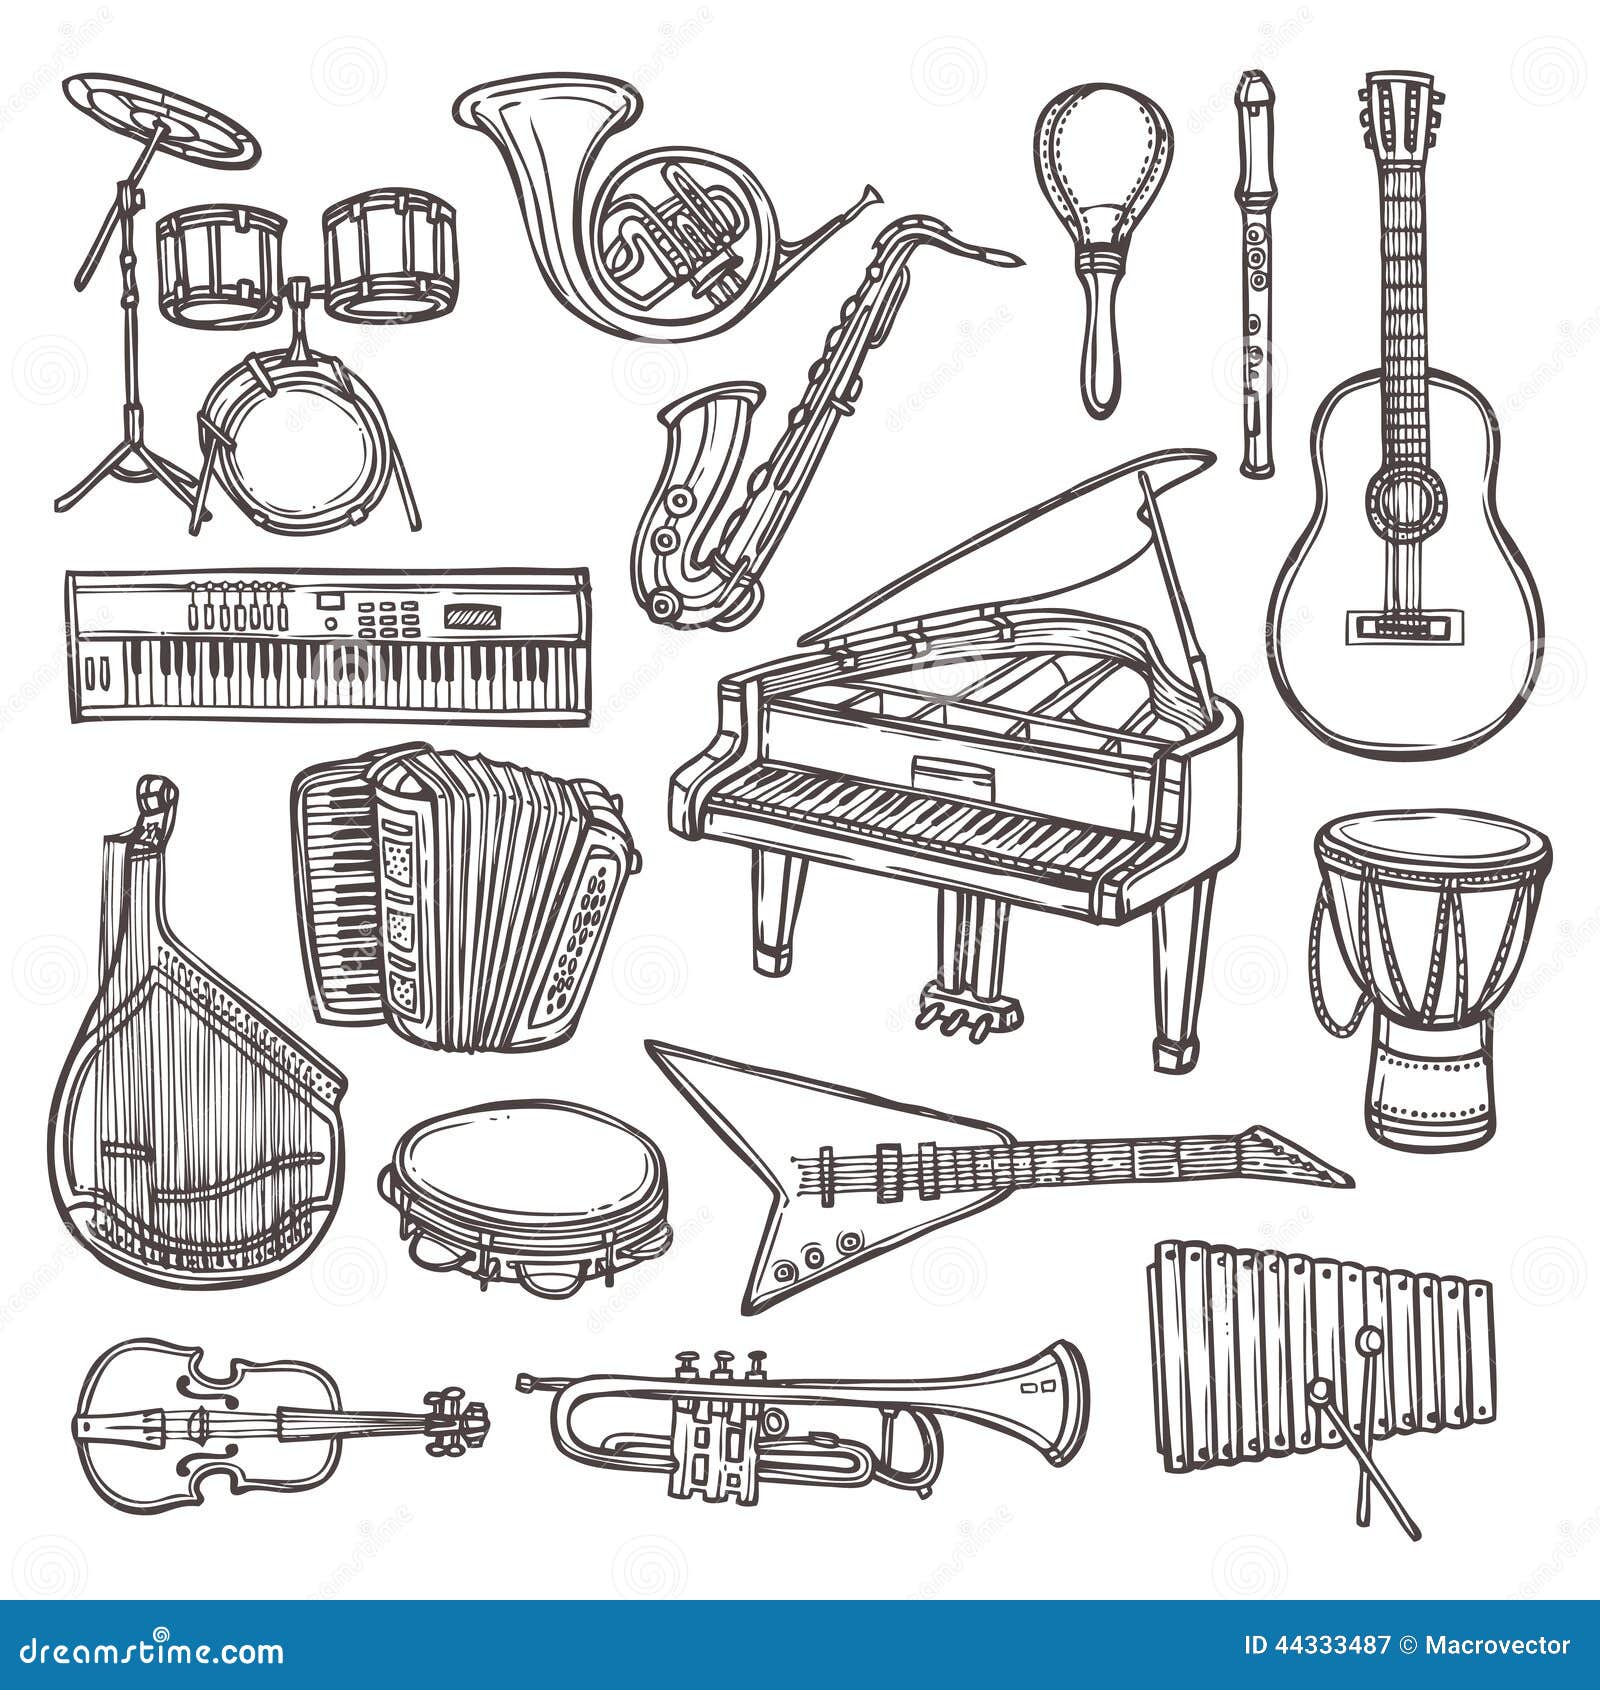 How to Draw Trumpet, Musical Instruments-saigonsouth.com.vn